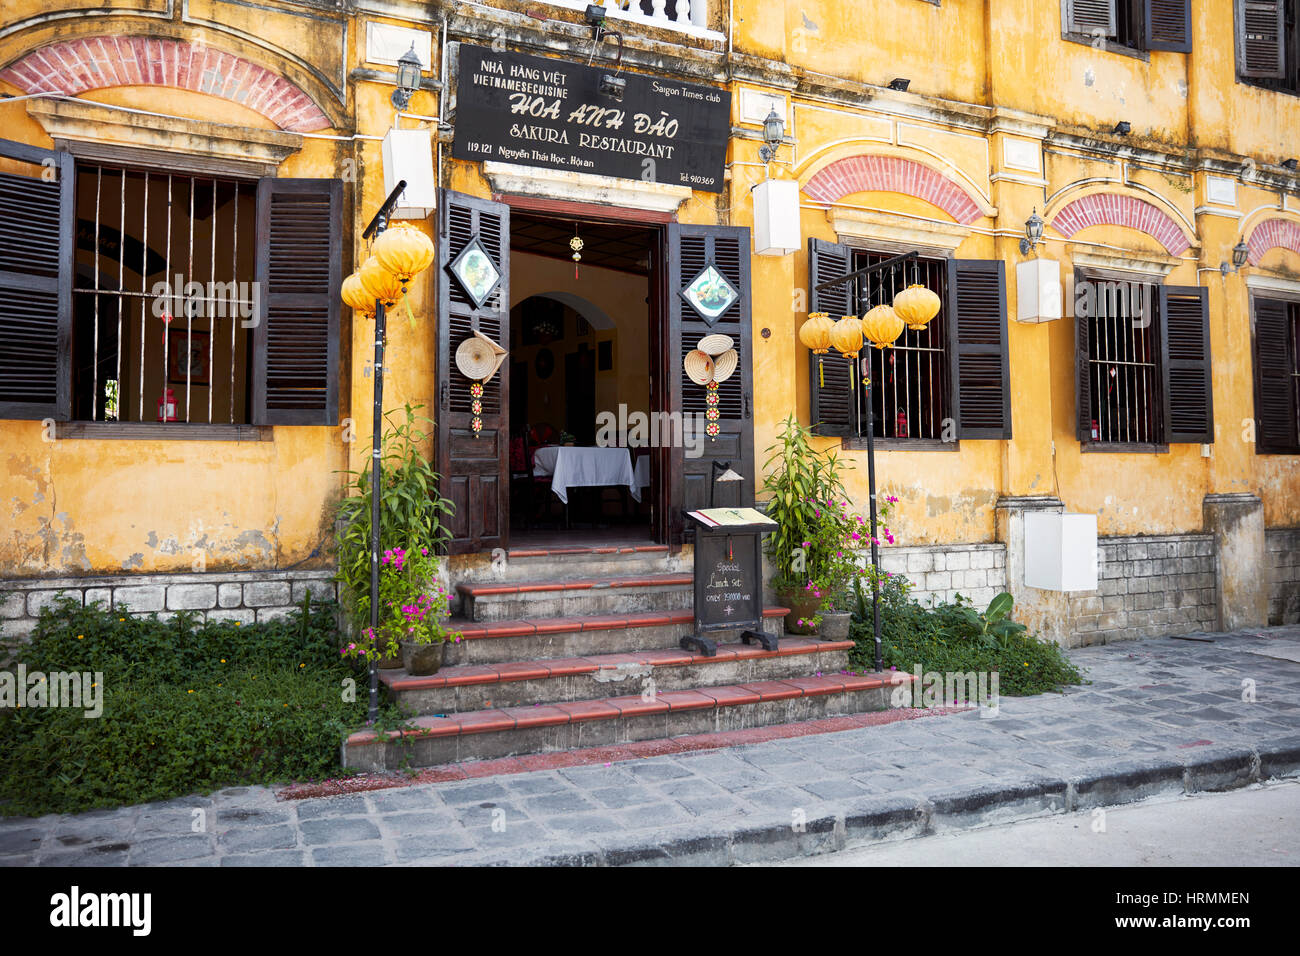 Facade of the Sakura Restaurant building. Hoi An Ancient Town, Quang Nam Province, Vietnam. Stock Photo